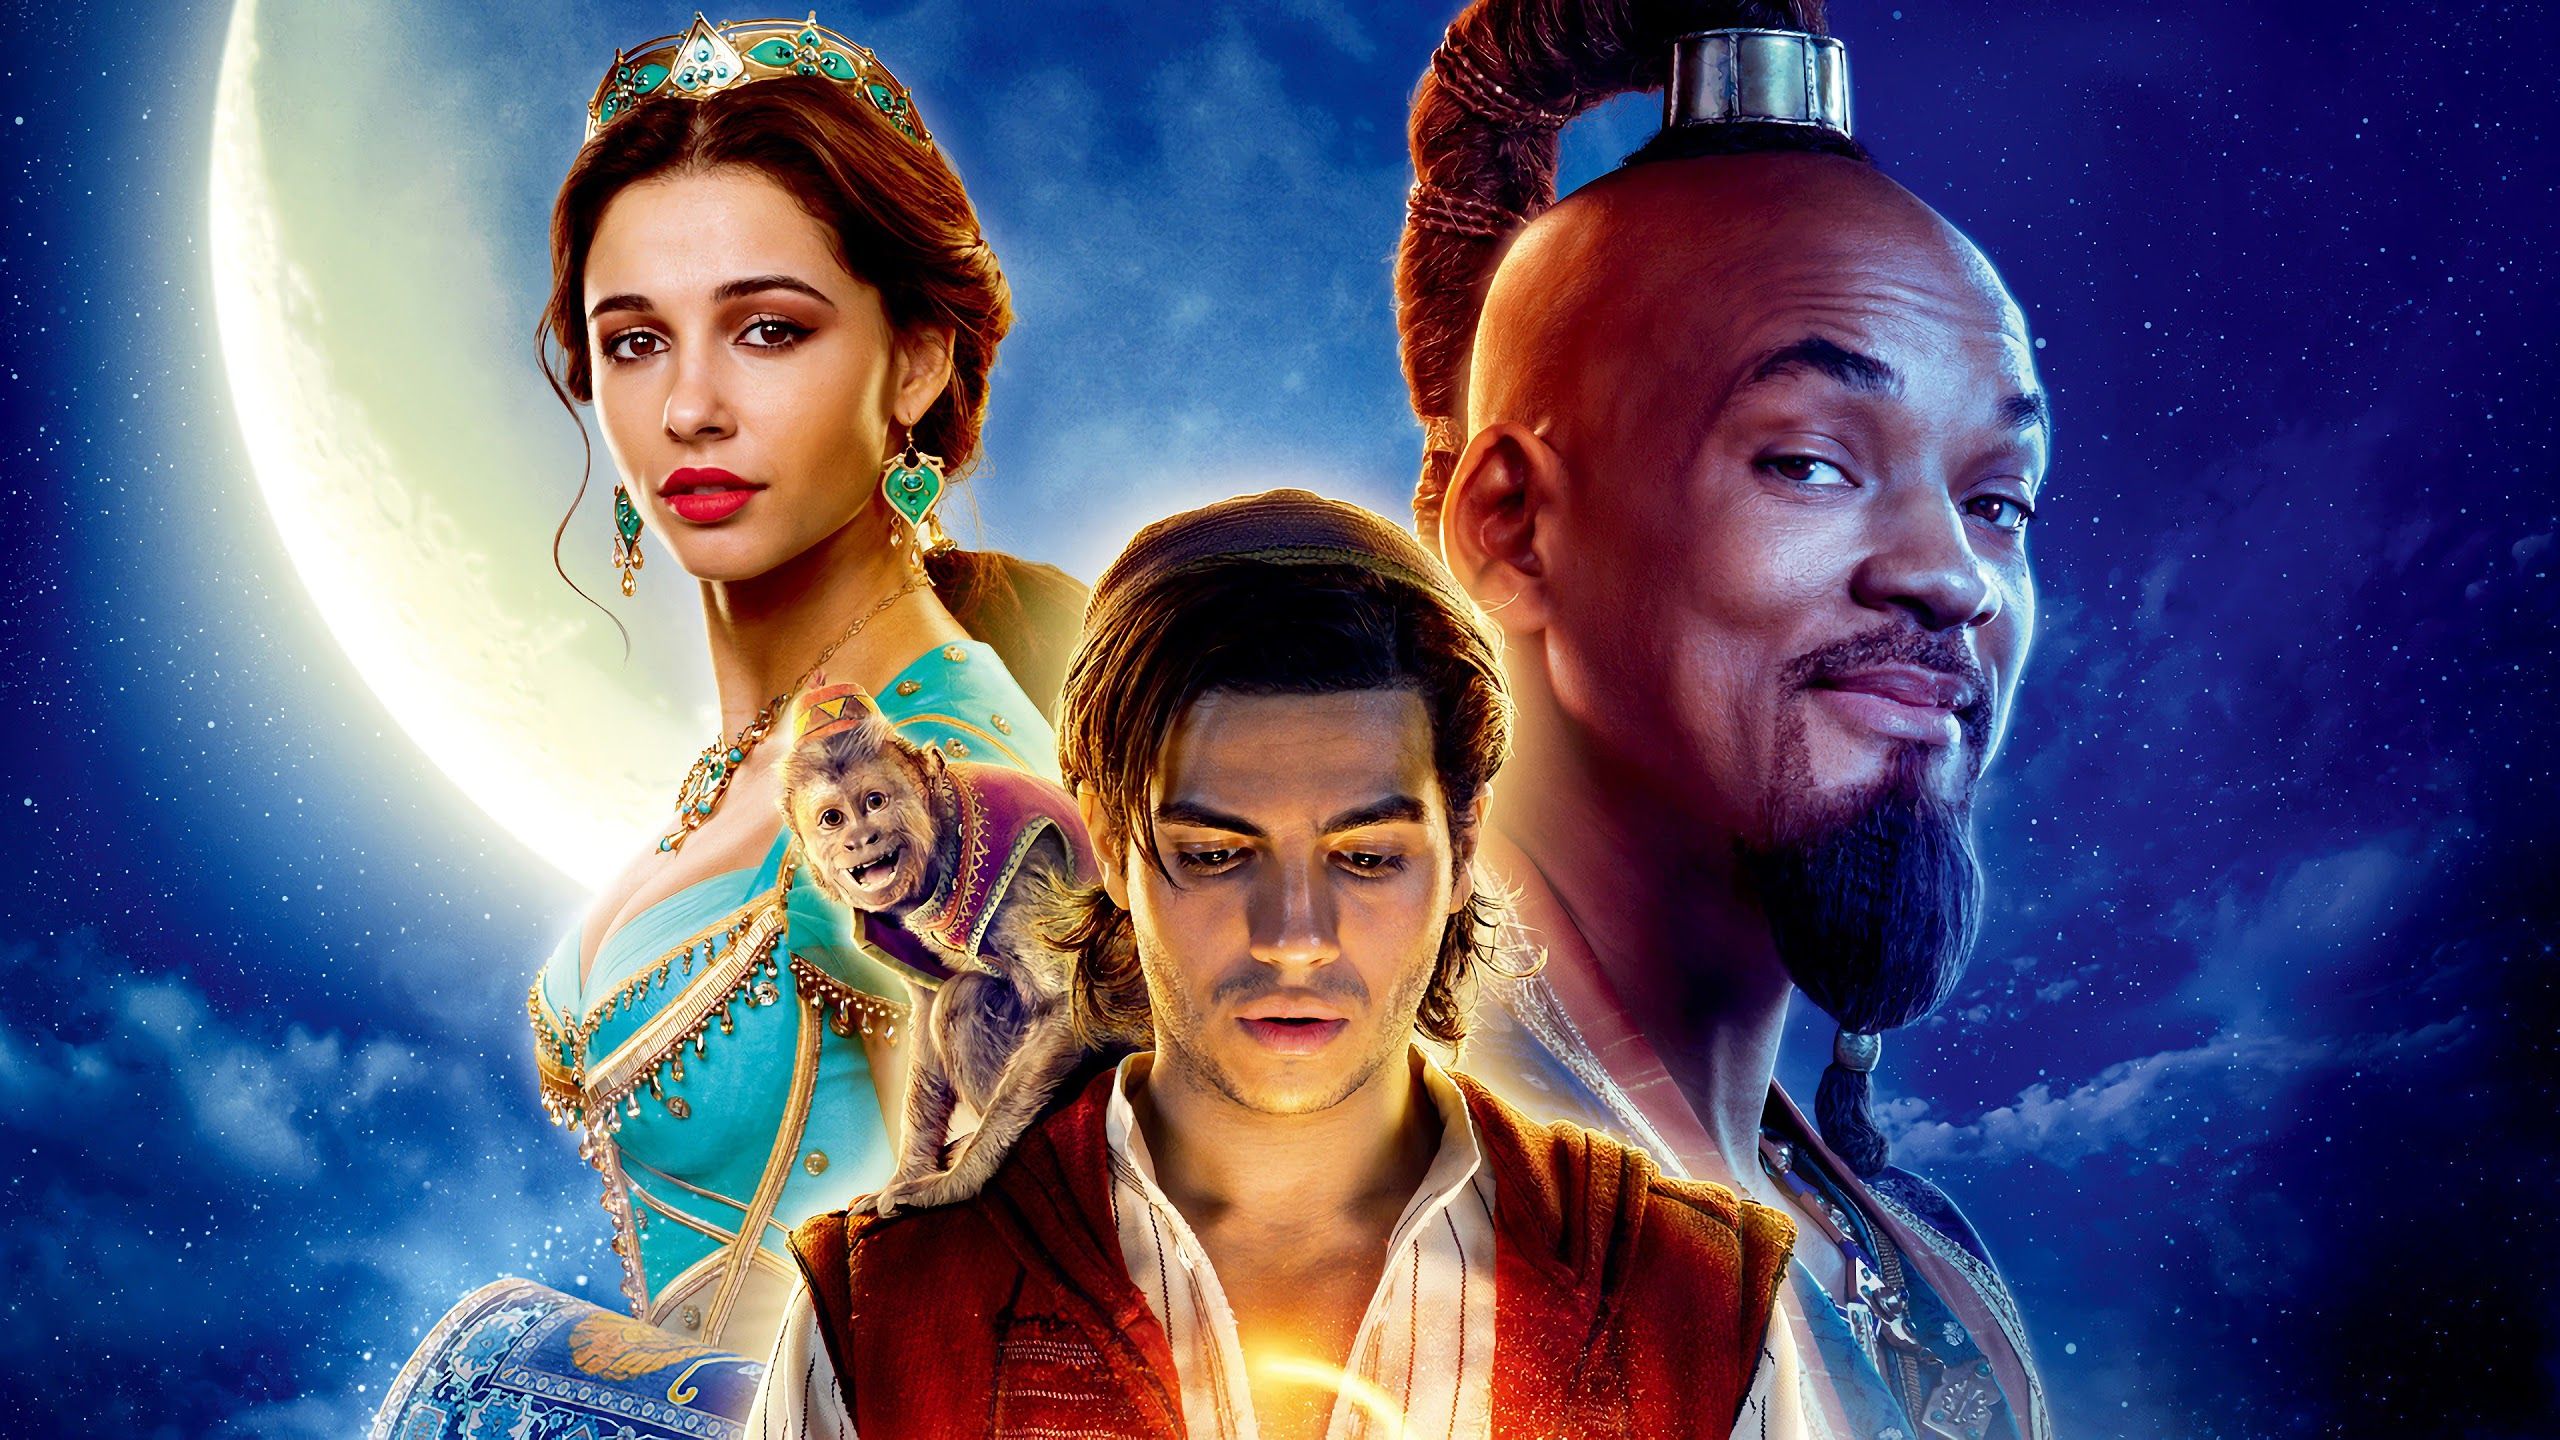 Disney Aladdin 2019 Movie Poster Wallpapers